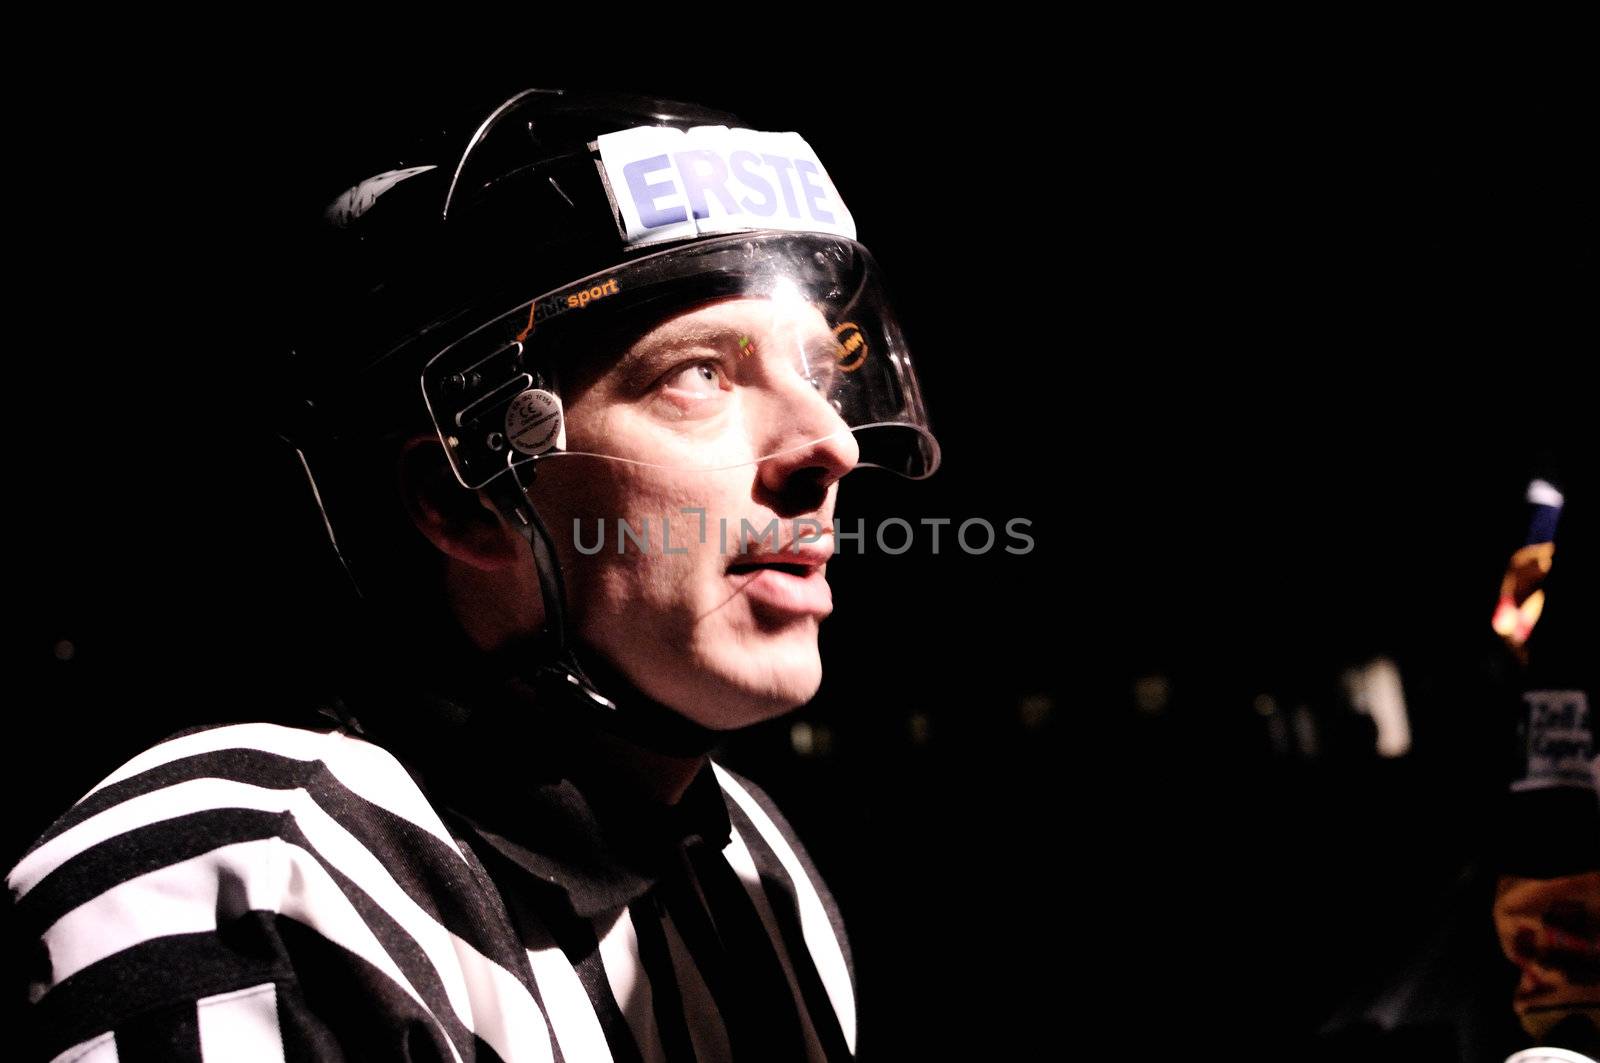 Hockey referee by fahrner